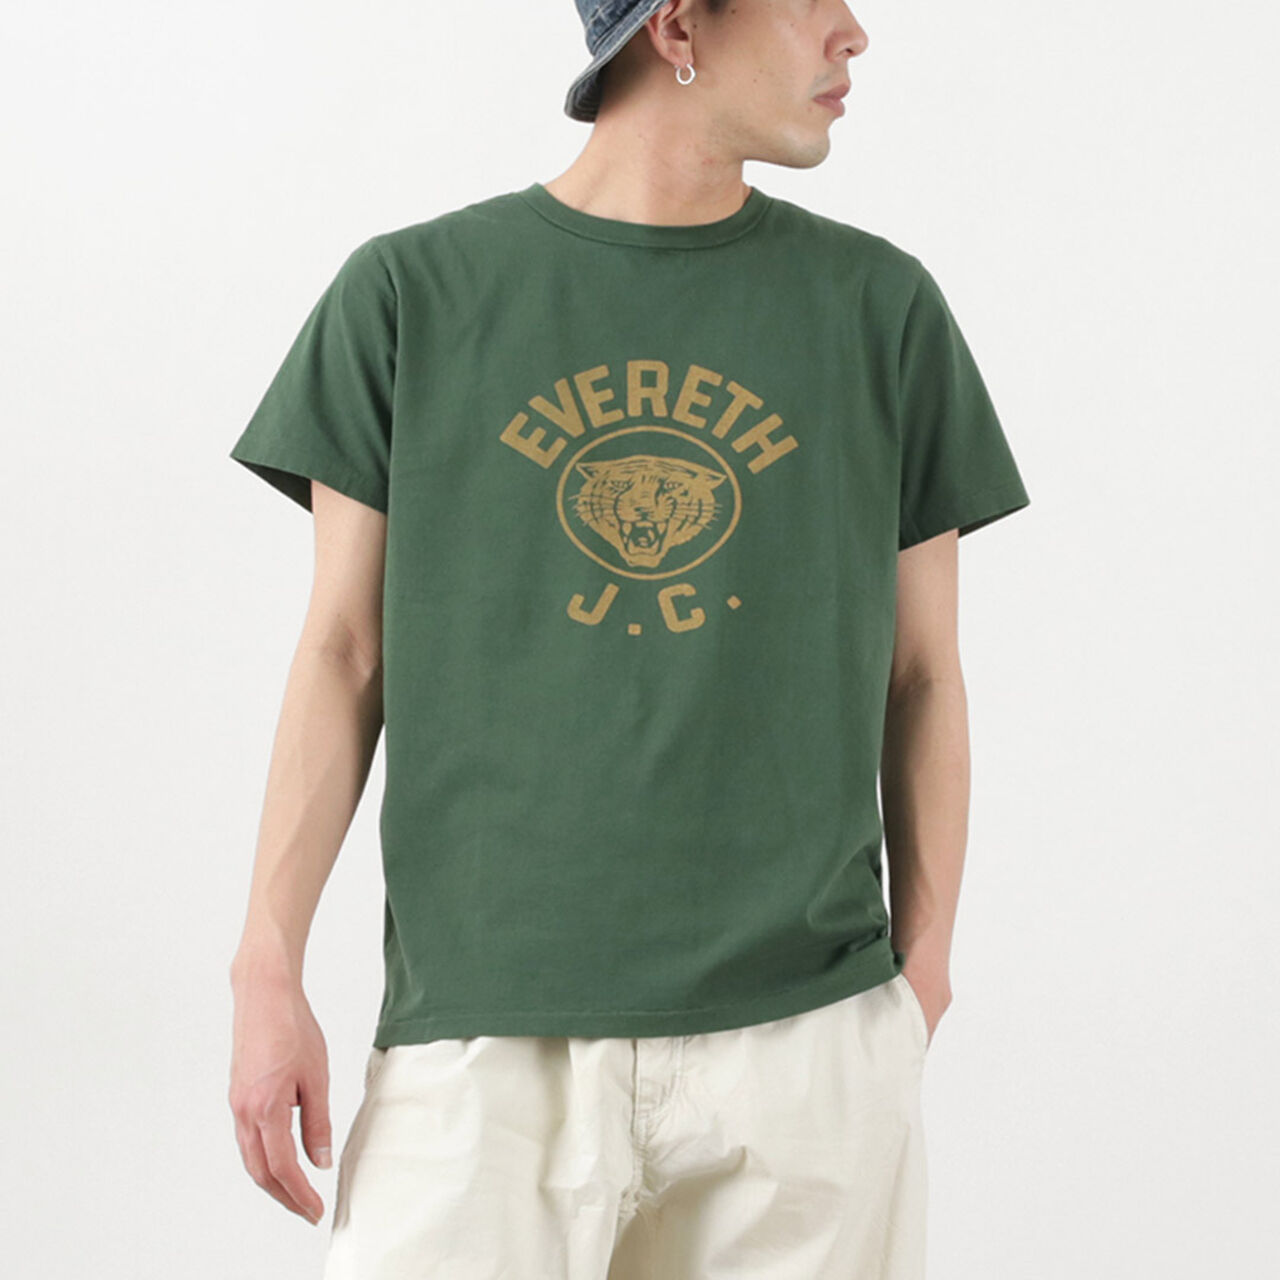 Long wash processing T-shirt (EVERETH J.C.),Green, large image number 0